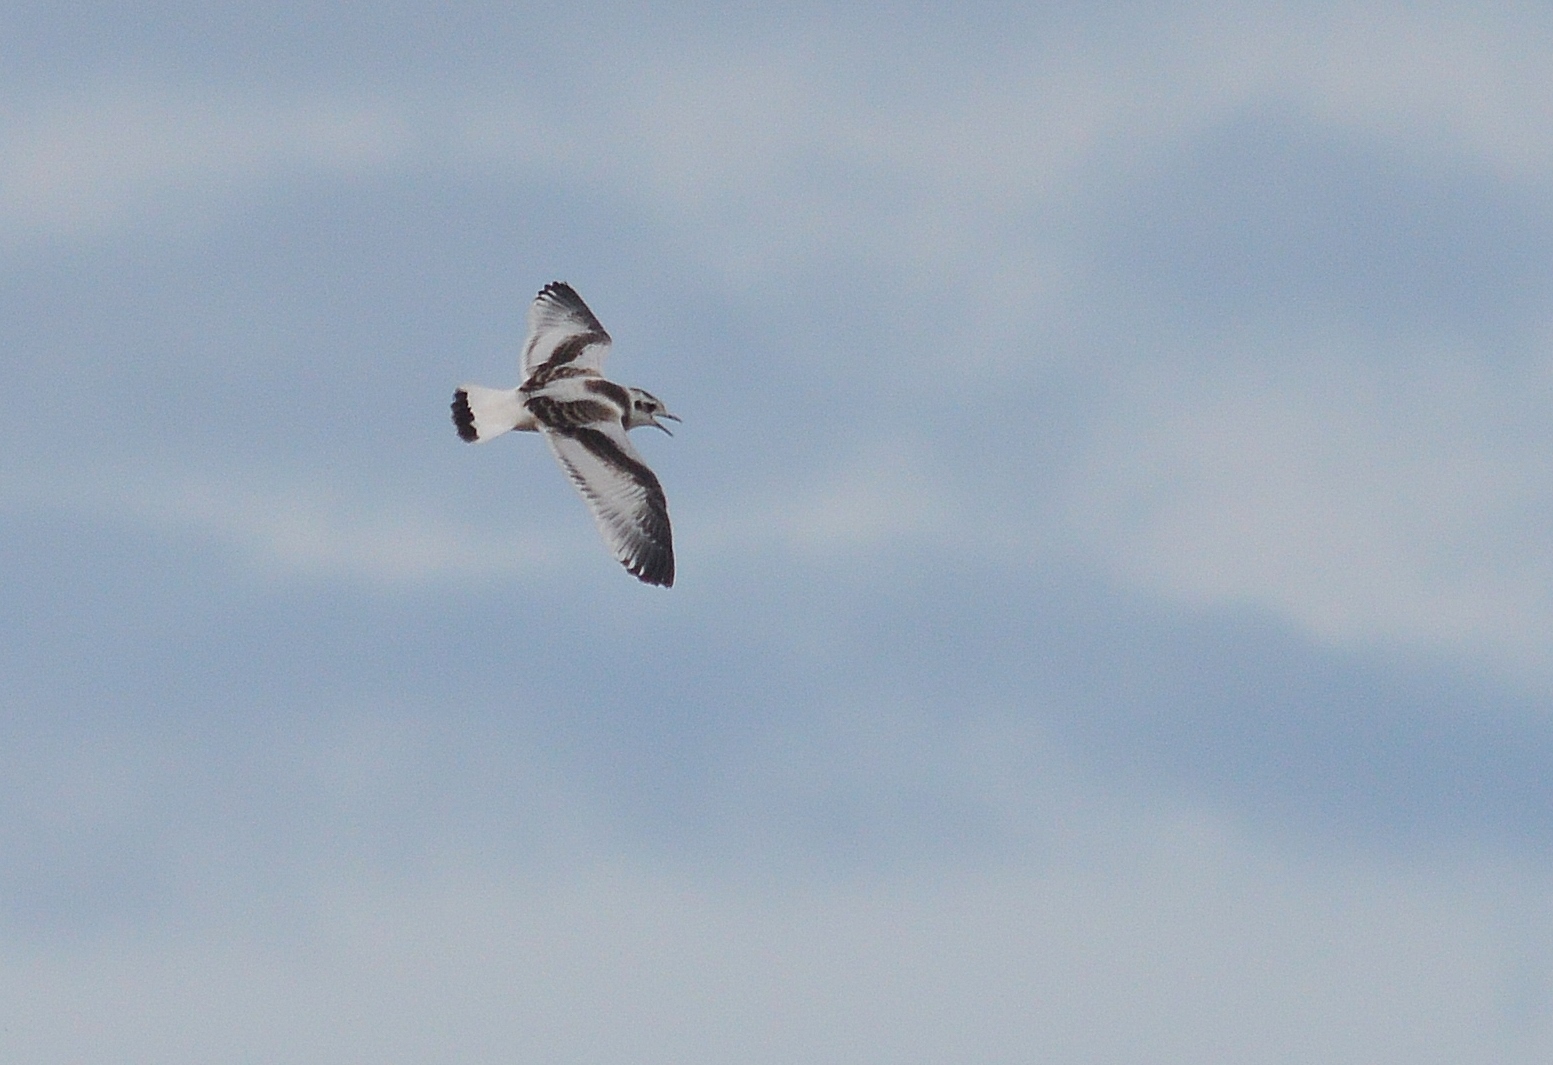 Baby gull in flight - credit Morwenna Egan